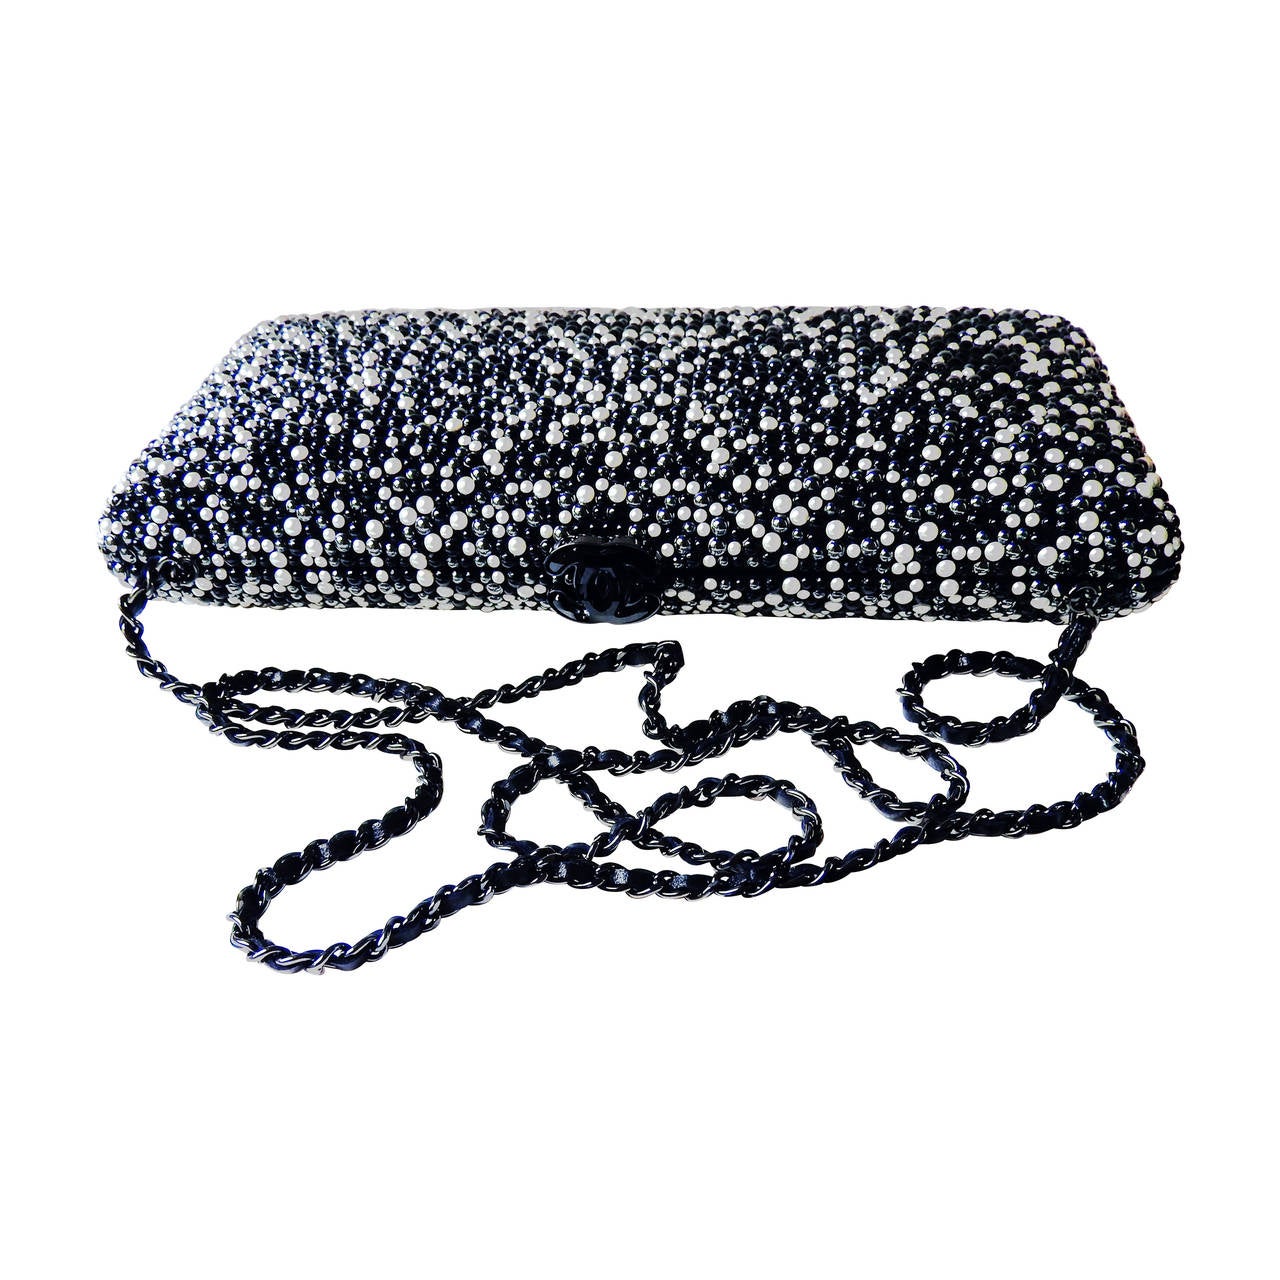 New Chanel 2014 Bijoux Jewelled Minaudière Pearl Clutch Bag For Sale